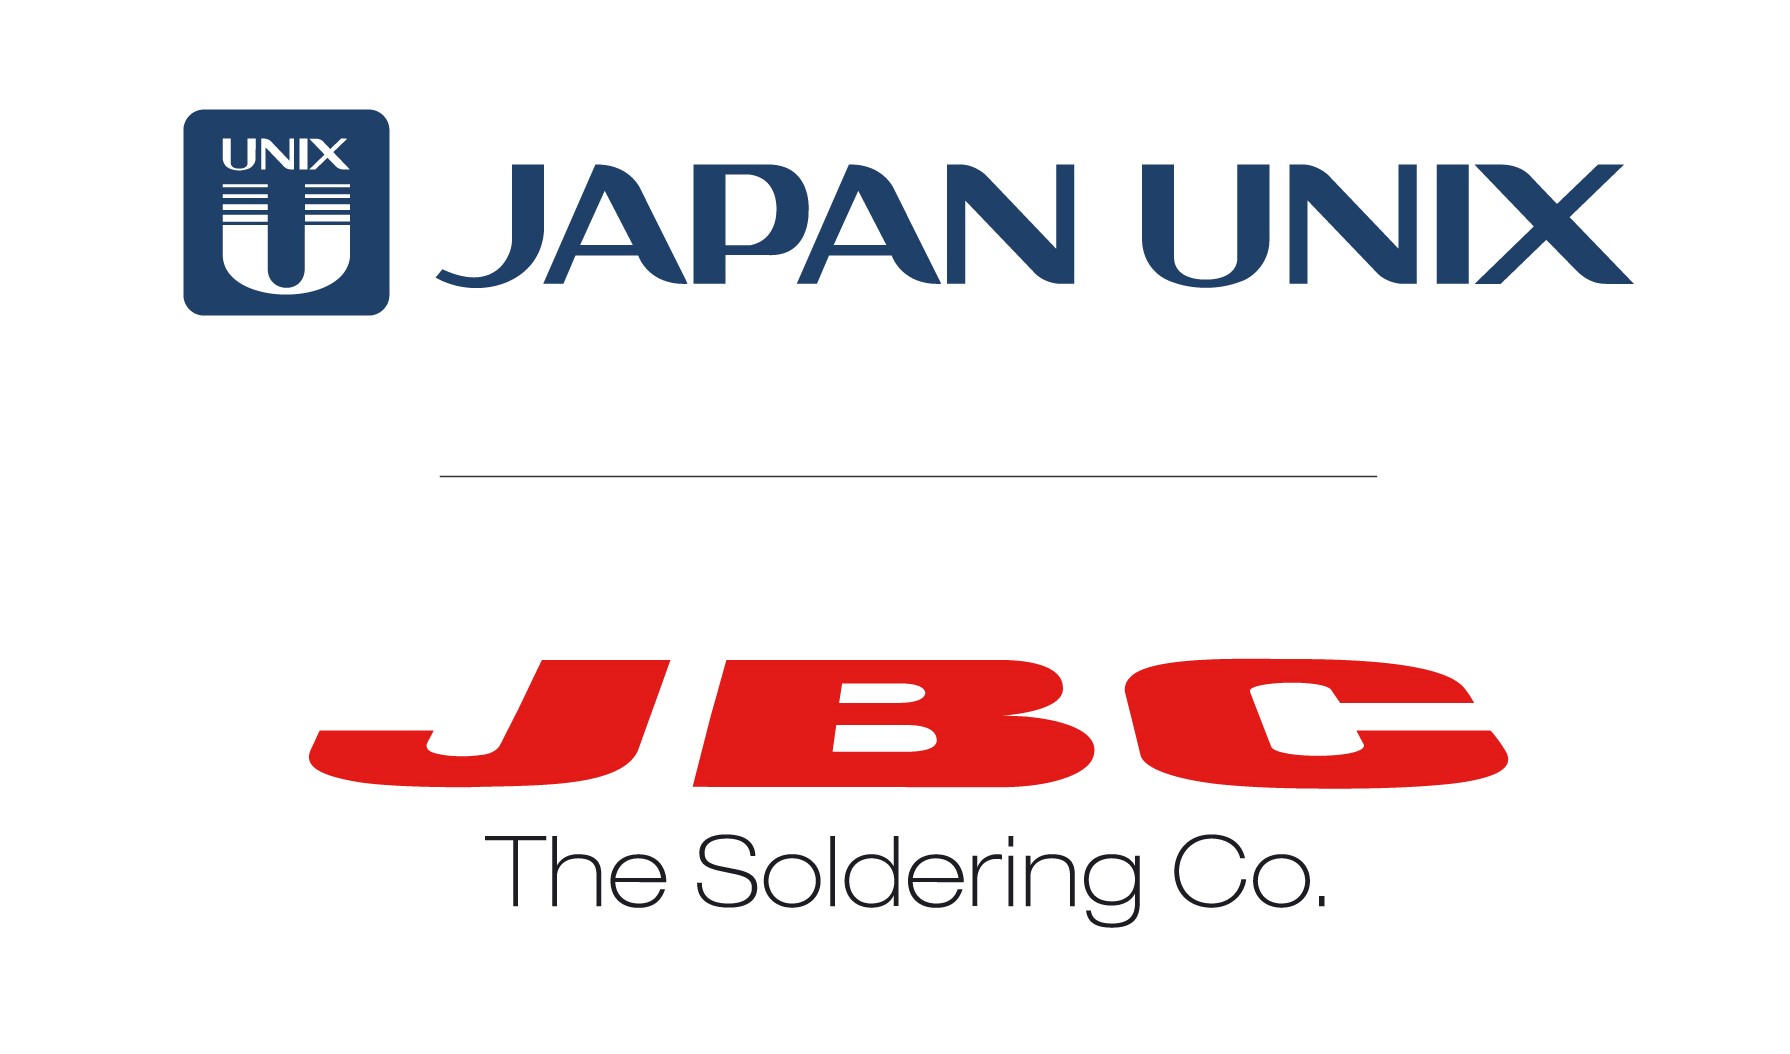 Japan Unix Co., Ltd.